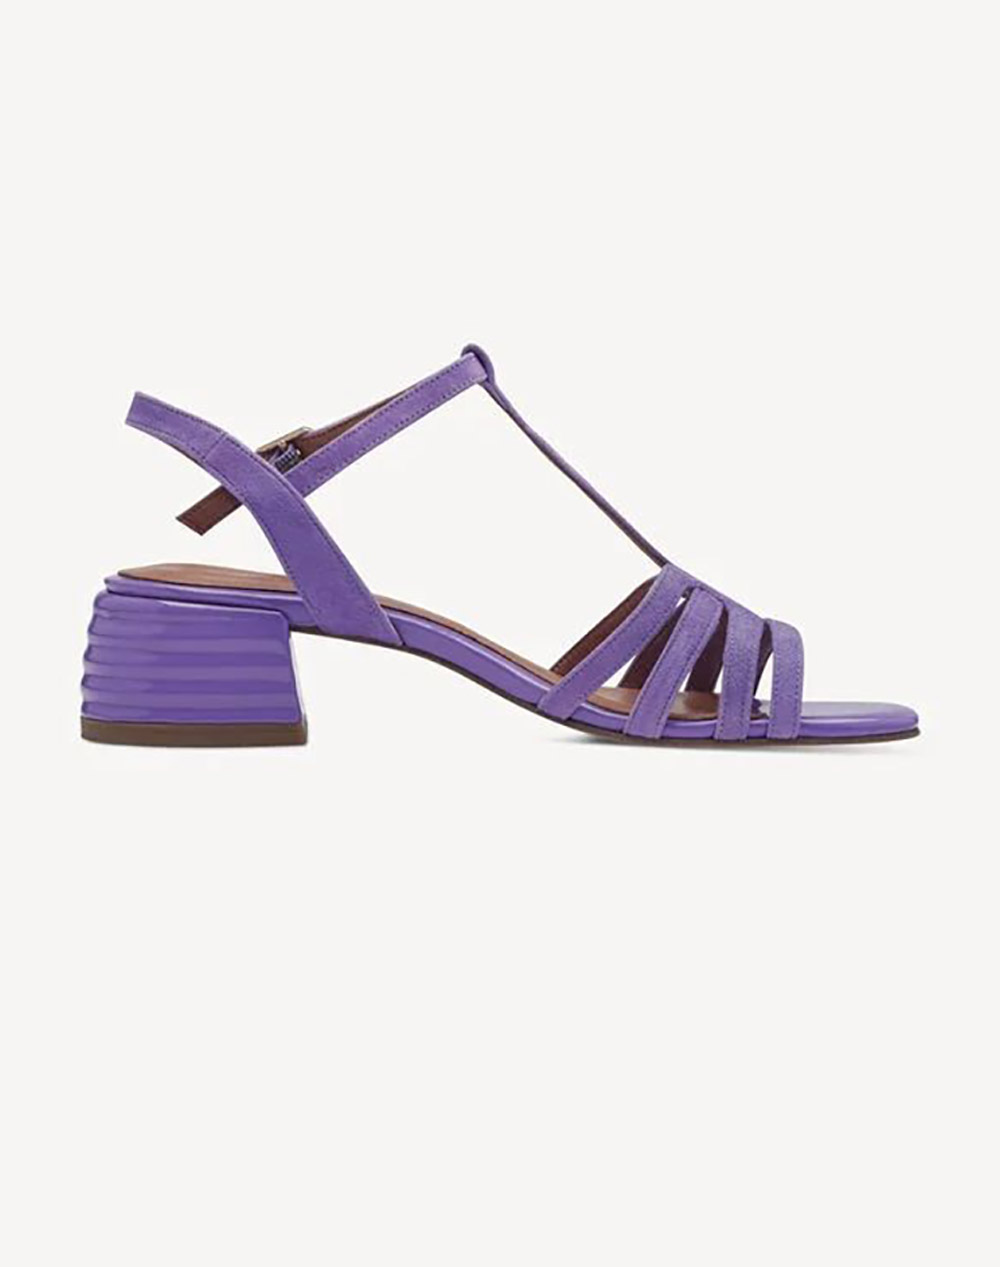 TAMARIS Sling Sandals 1-28223-42-563 Purple